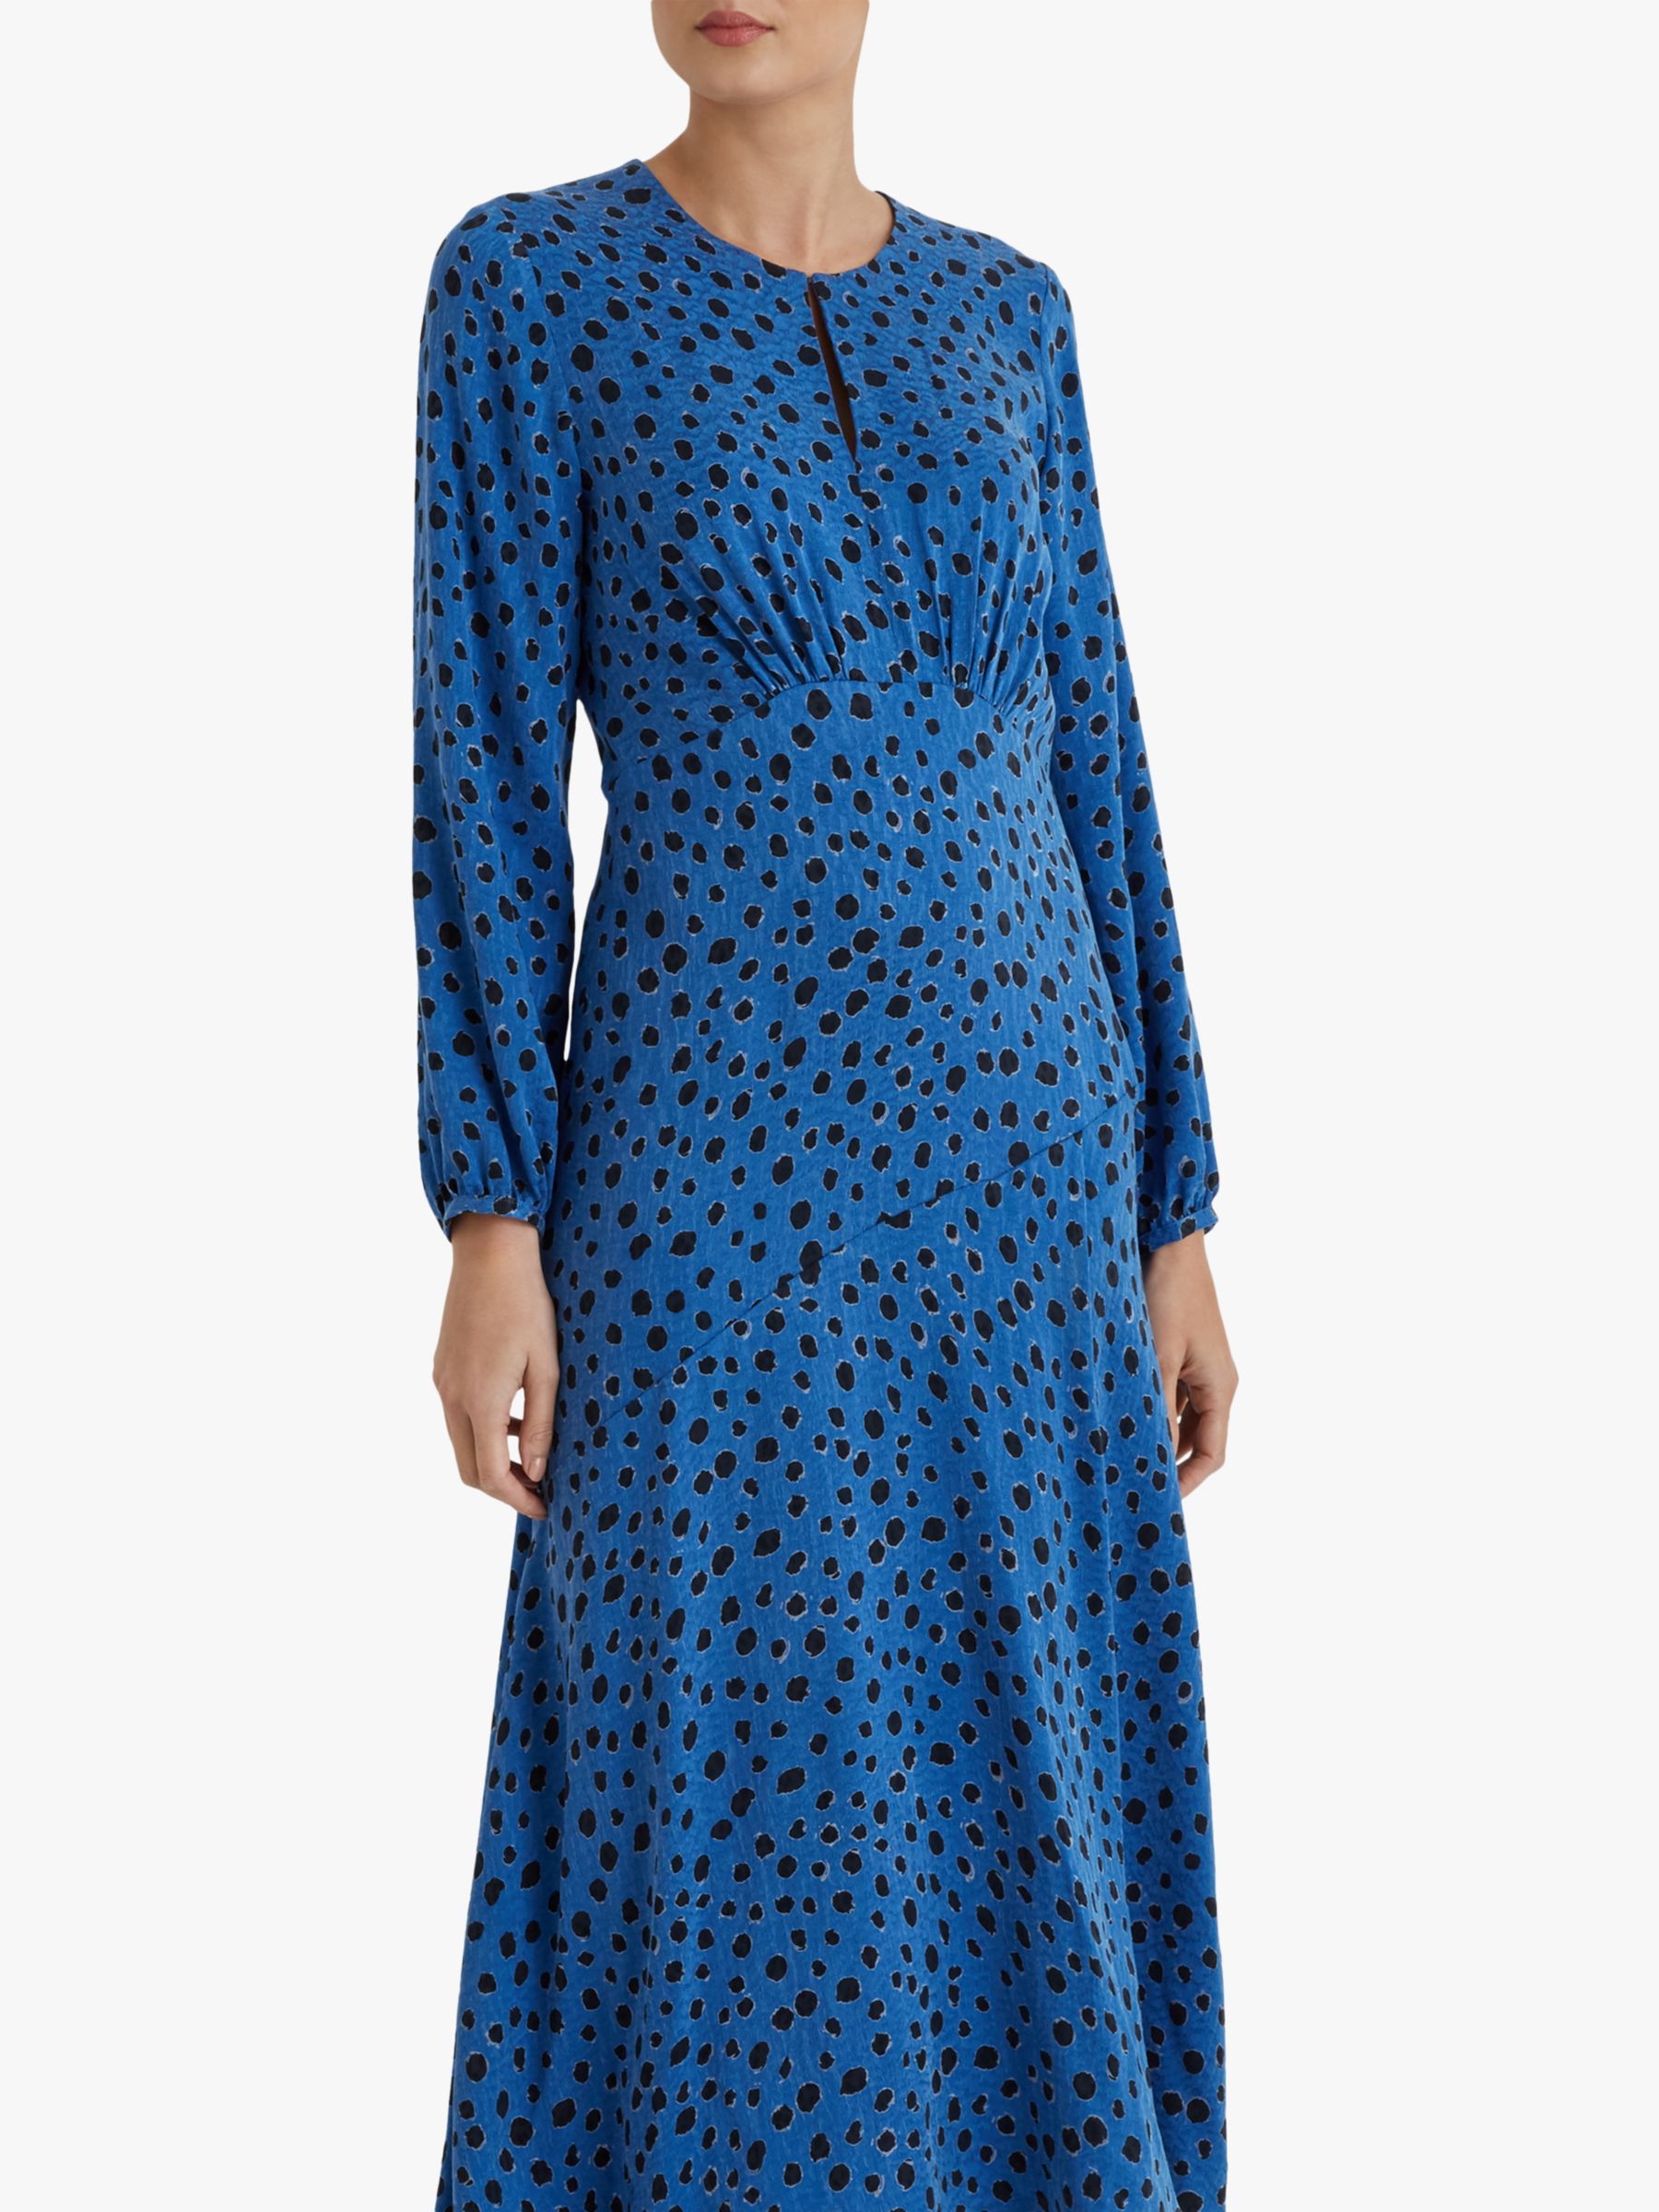 Fenn Wright Manson Flavie Spot Print Midi Dress, Blue/Black